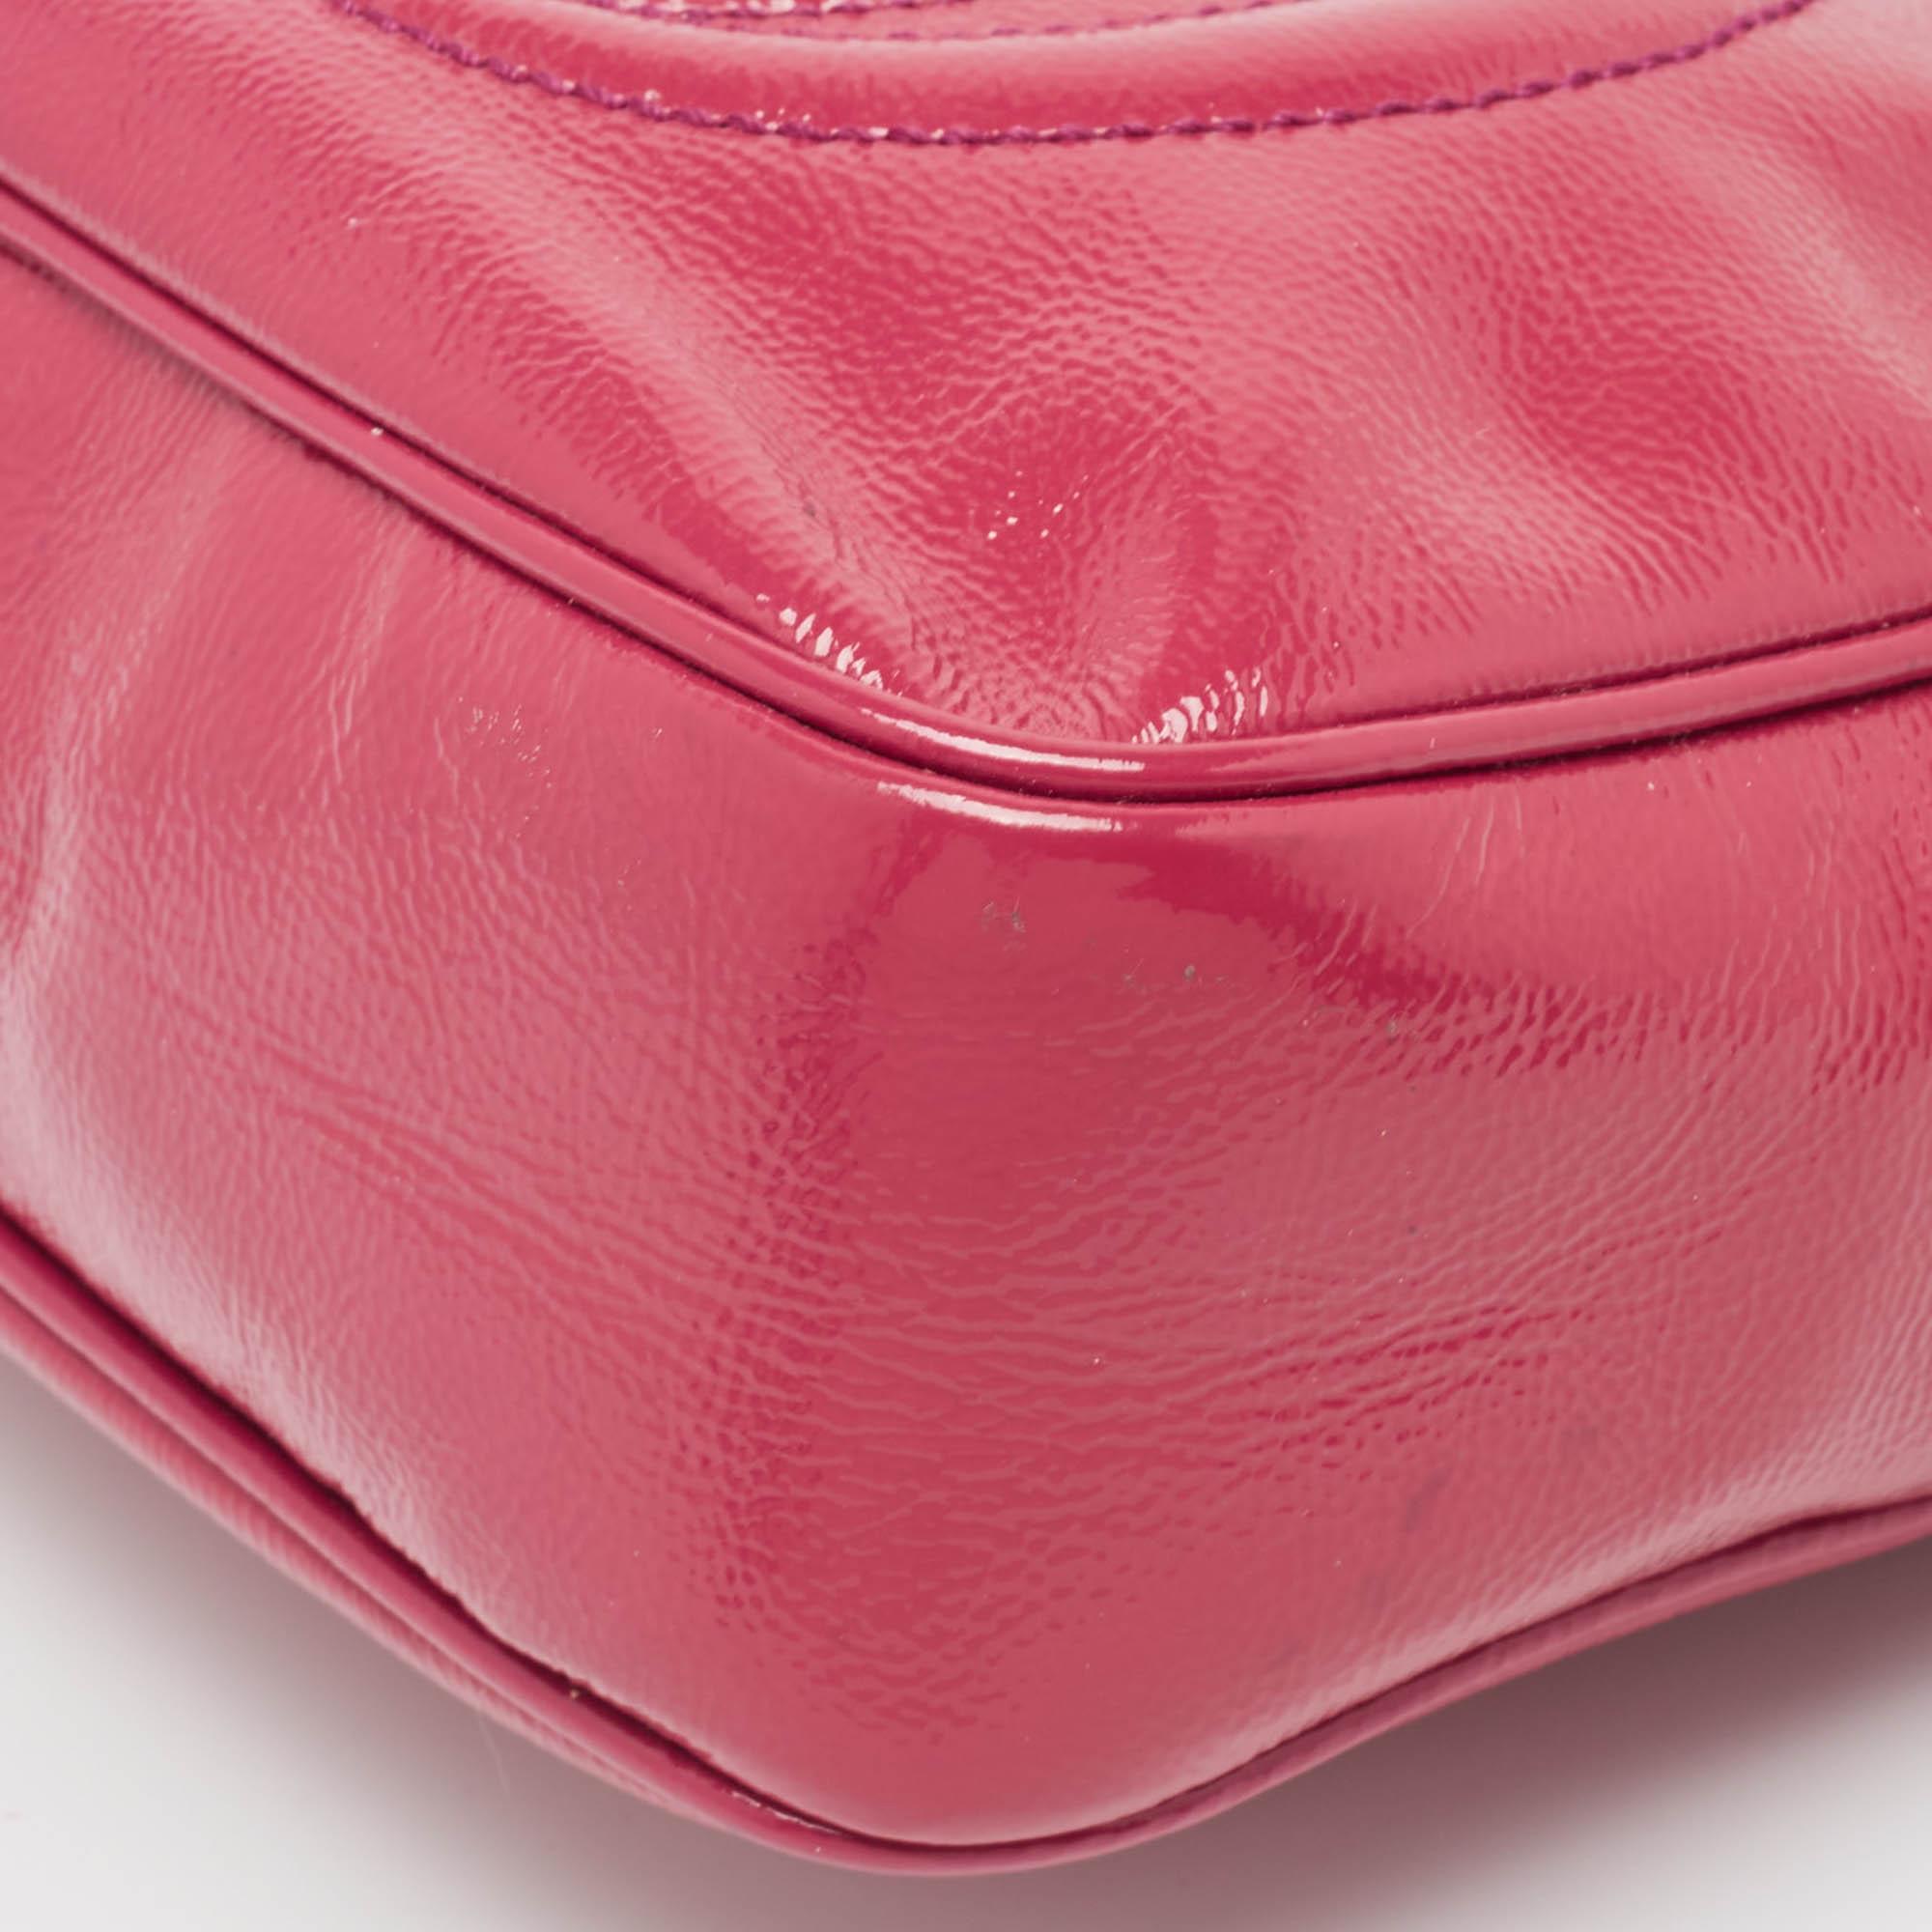 Gucci Fuchsia Patent Leather Small Soho Disco Crossbody Bag For Sale 5